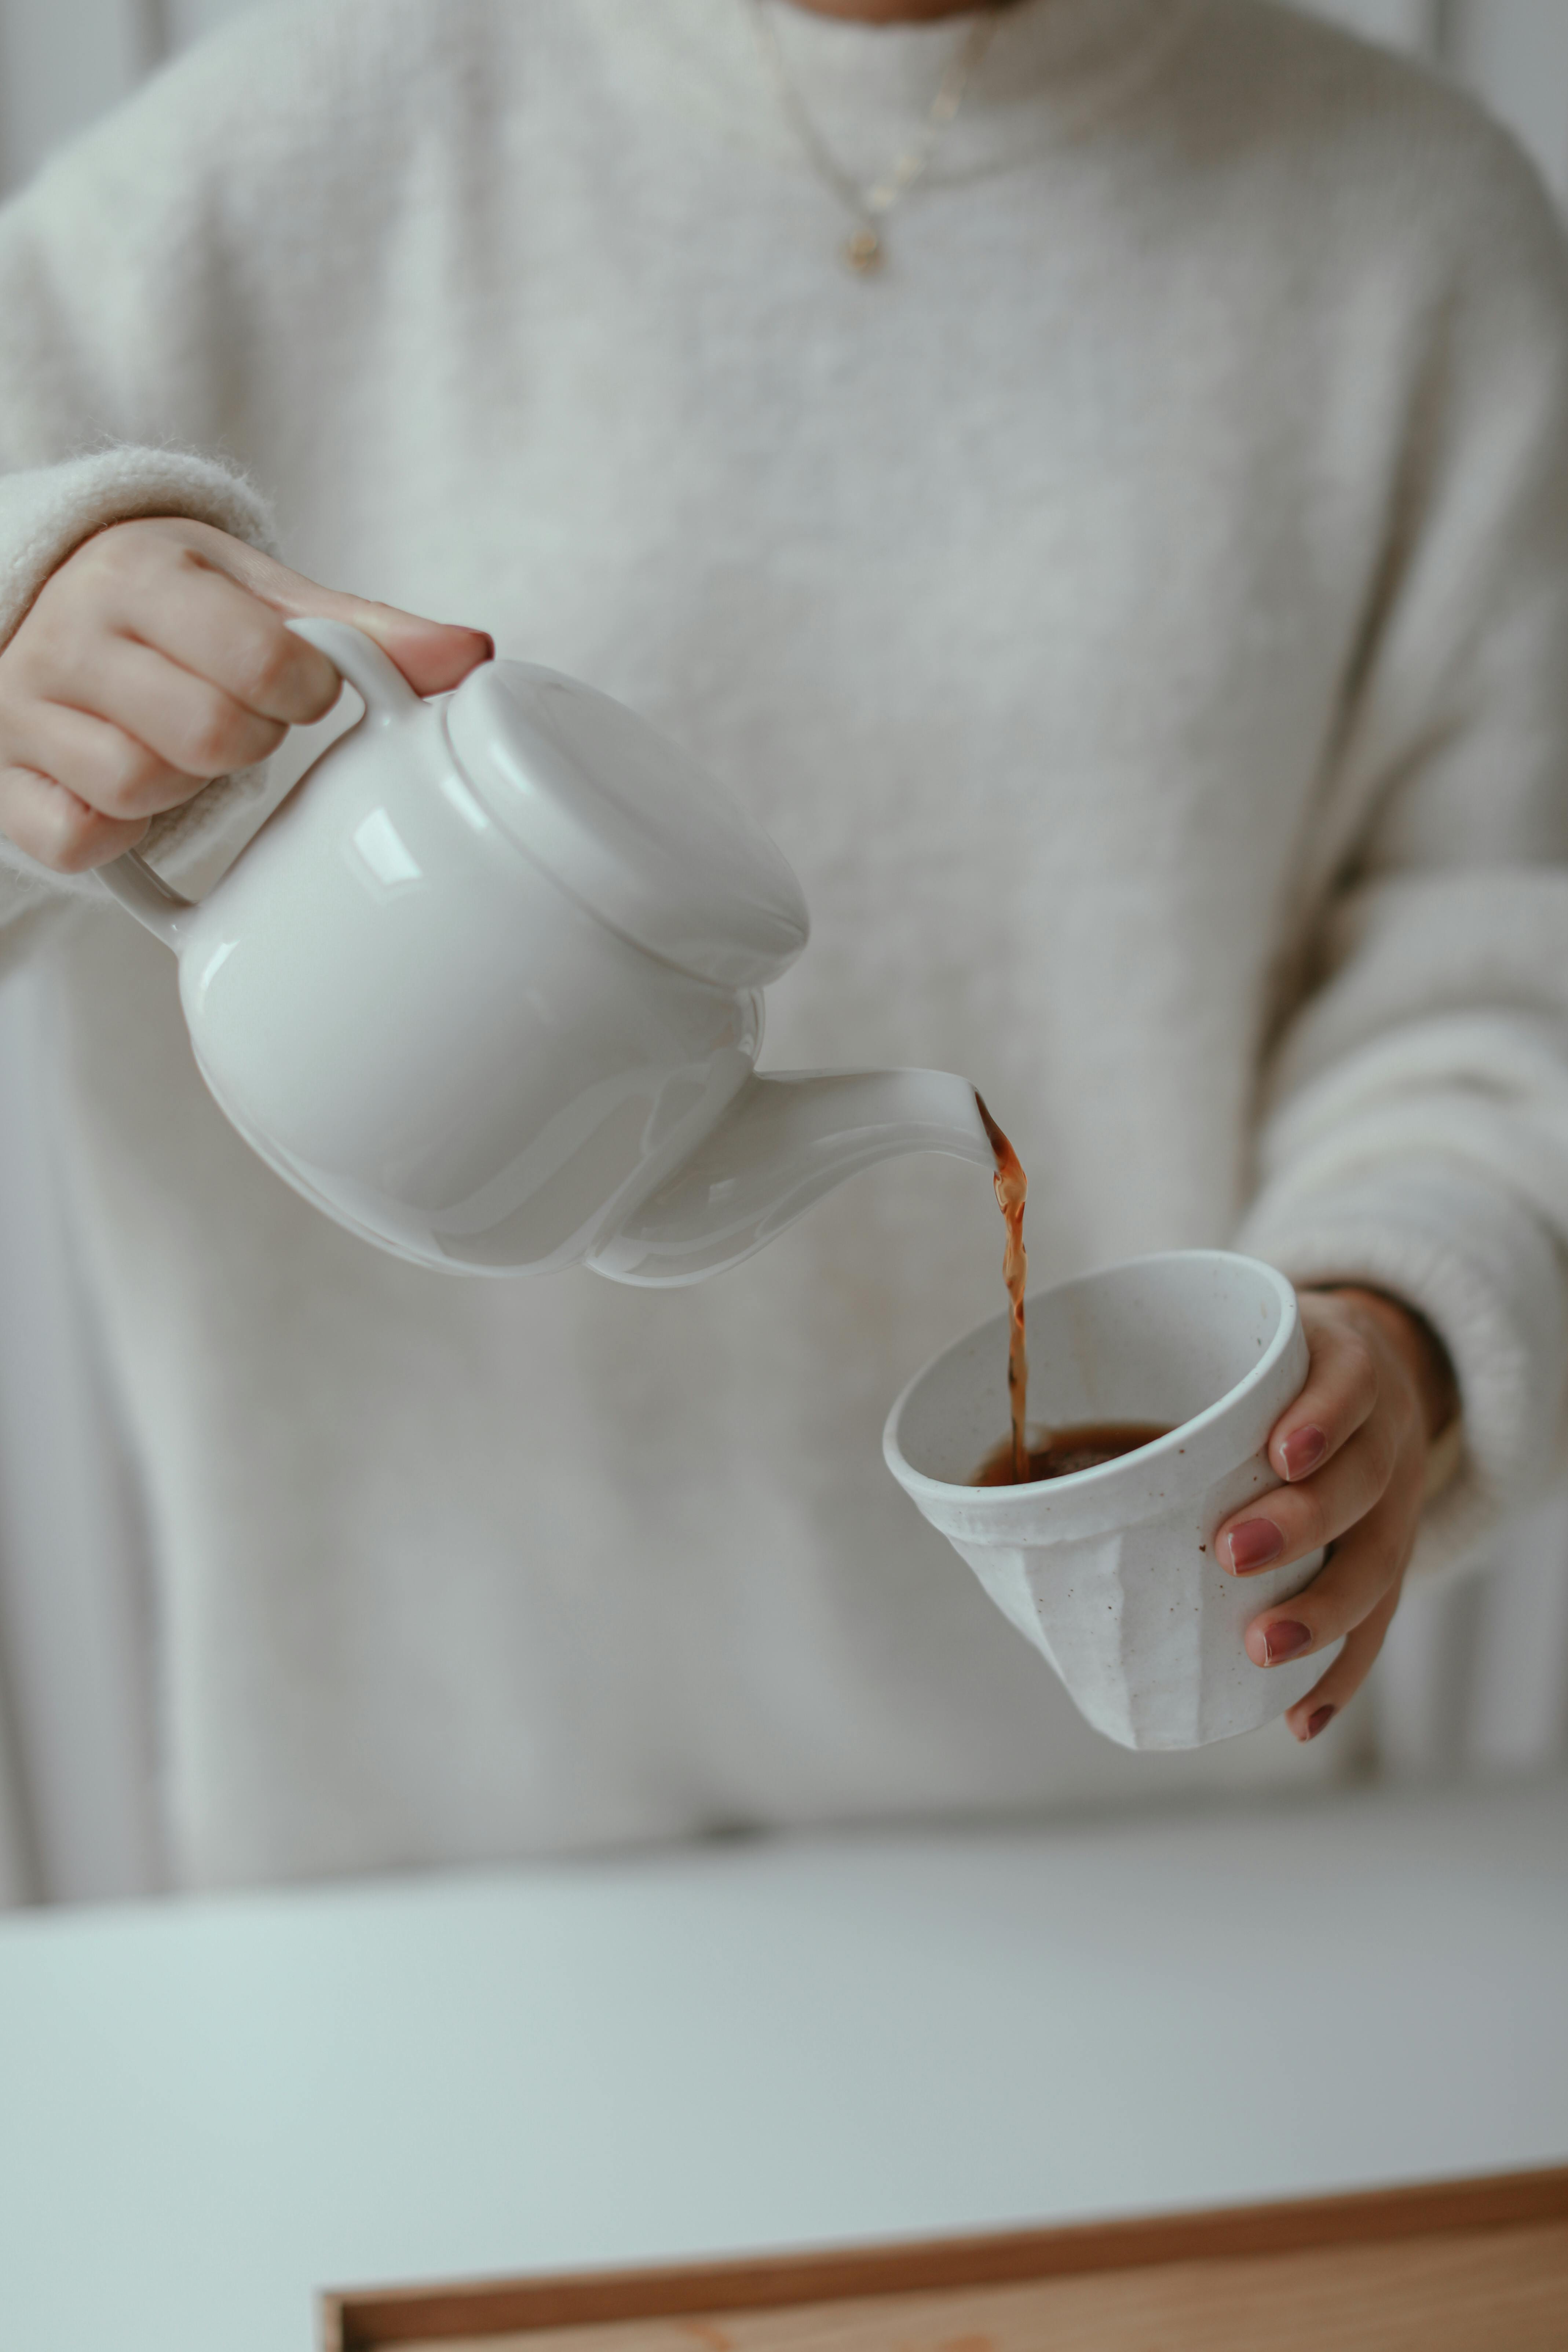 A hand pouring tea | Source: Pexels